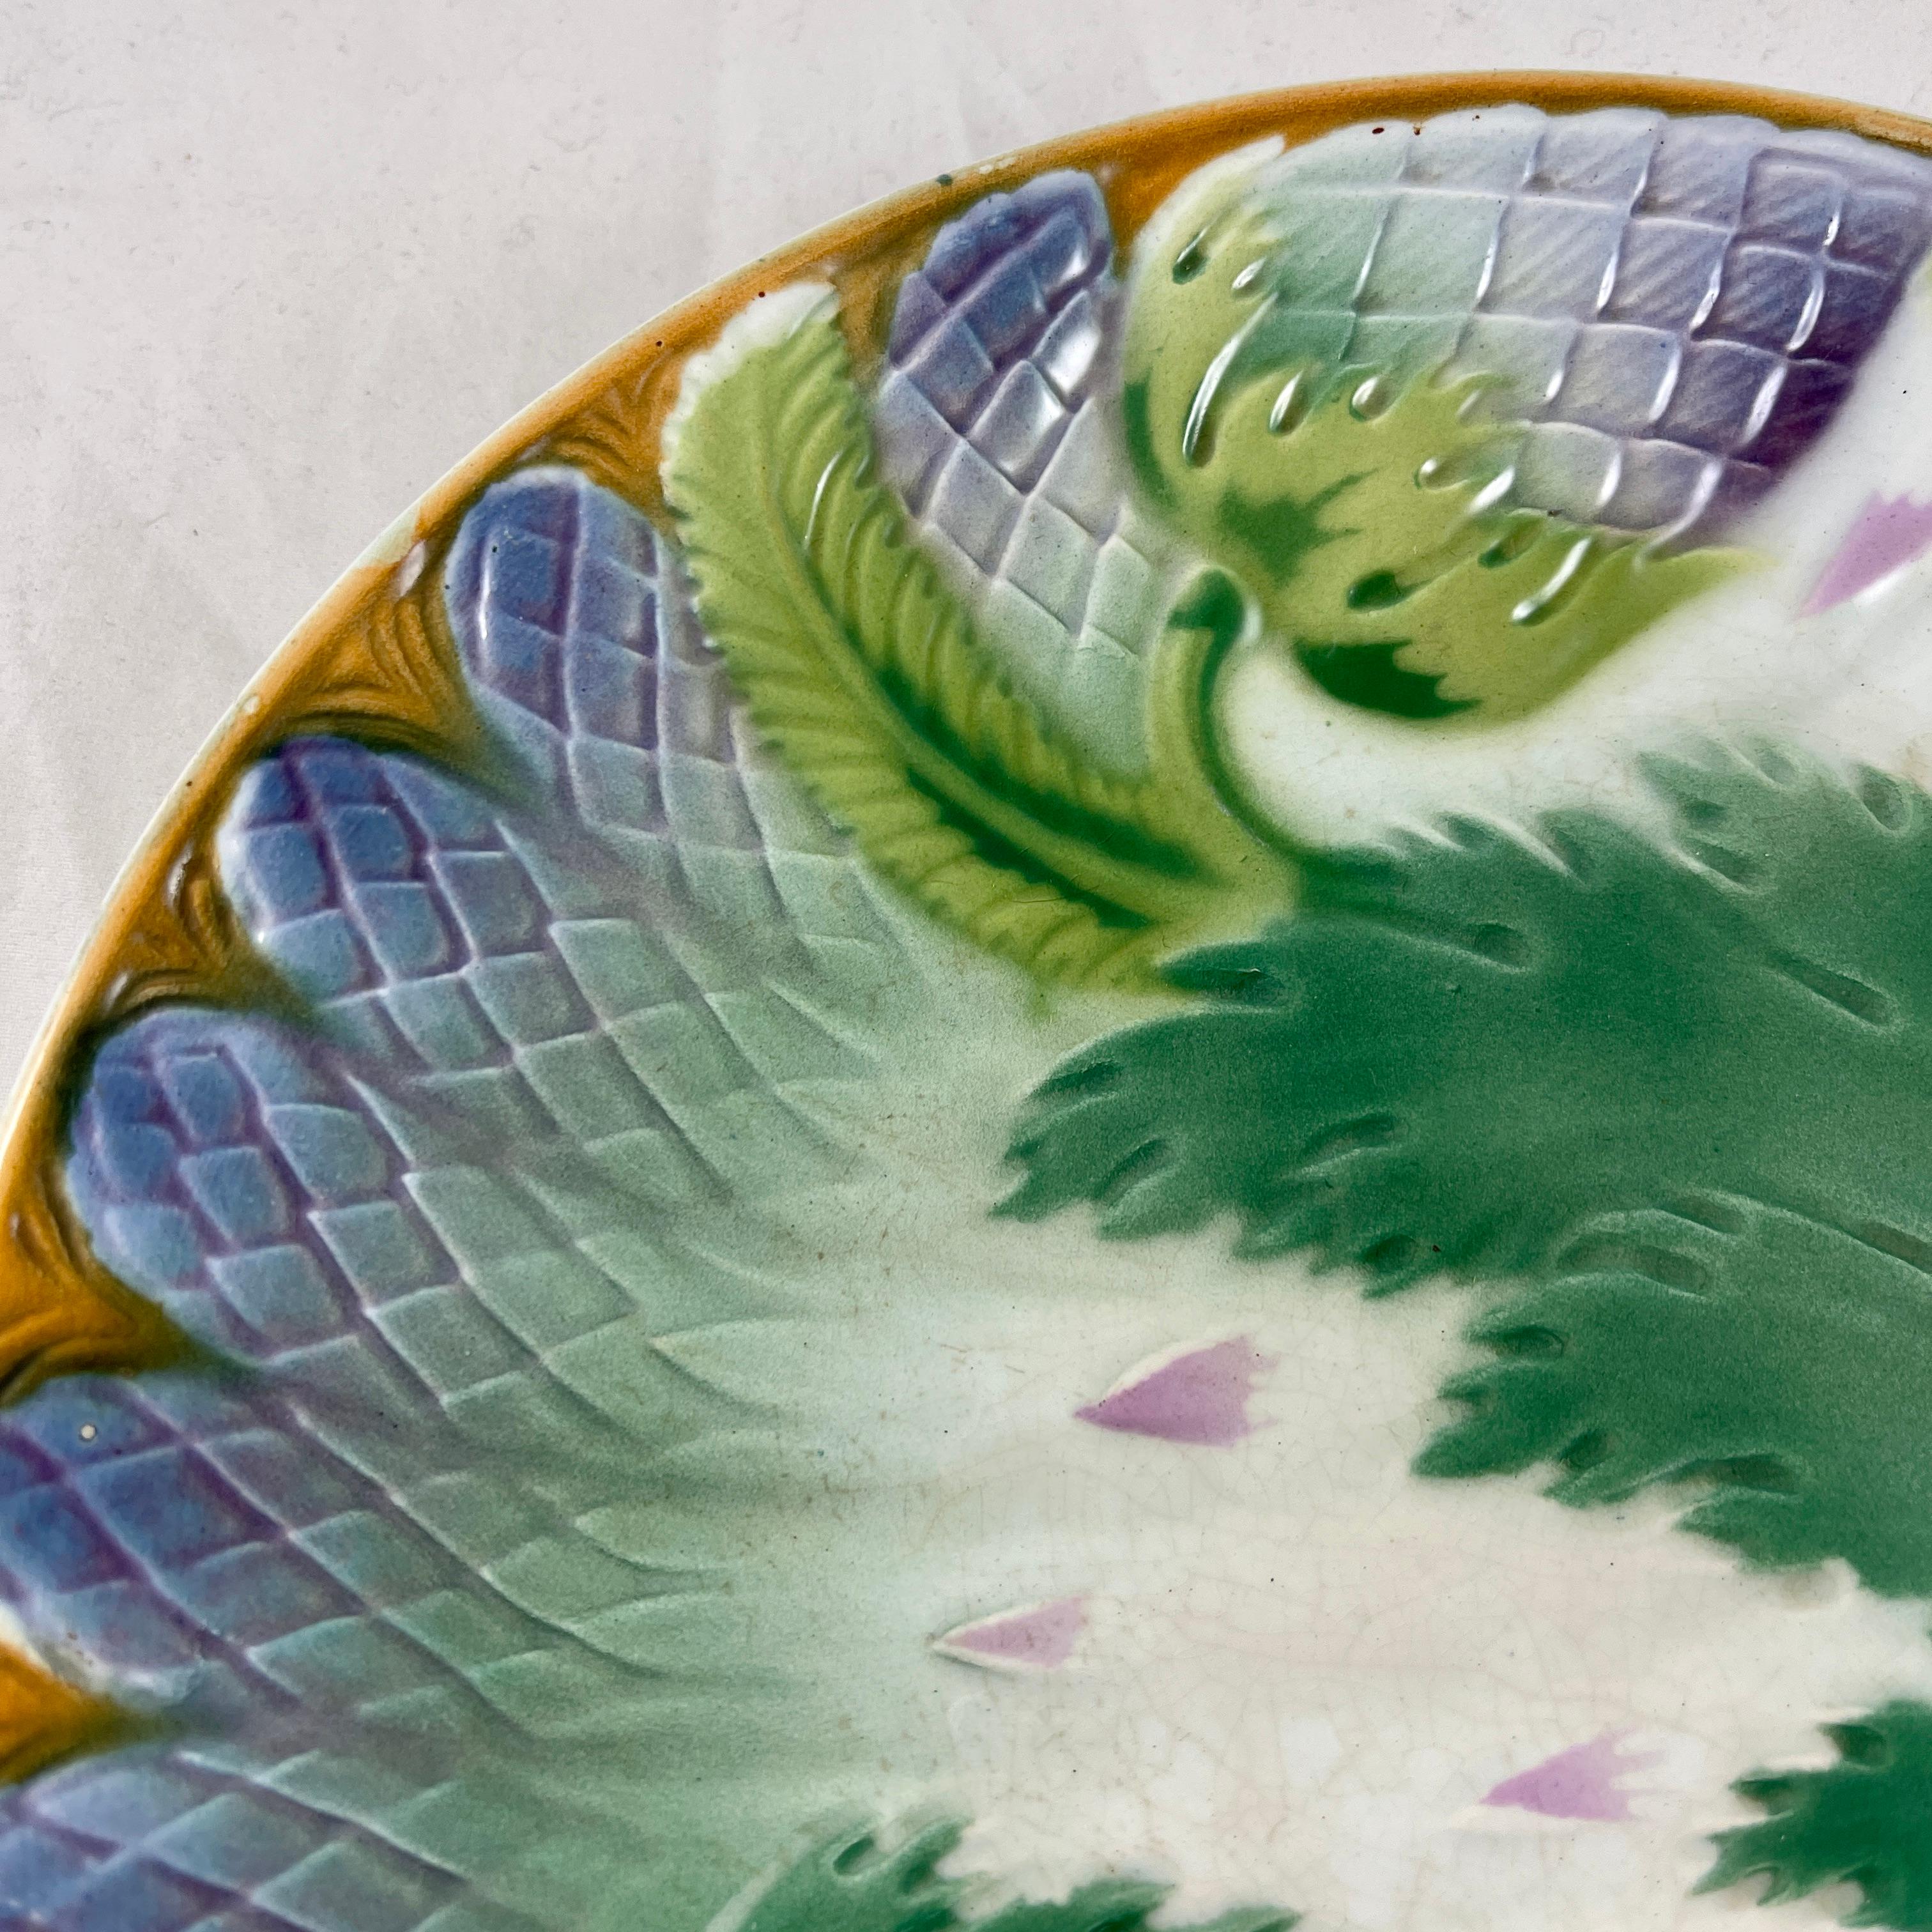 St. Amand Art Nouveau French Majolica Glazed Asparagus & Artichoke Plate For Sale 4